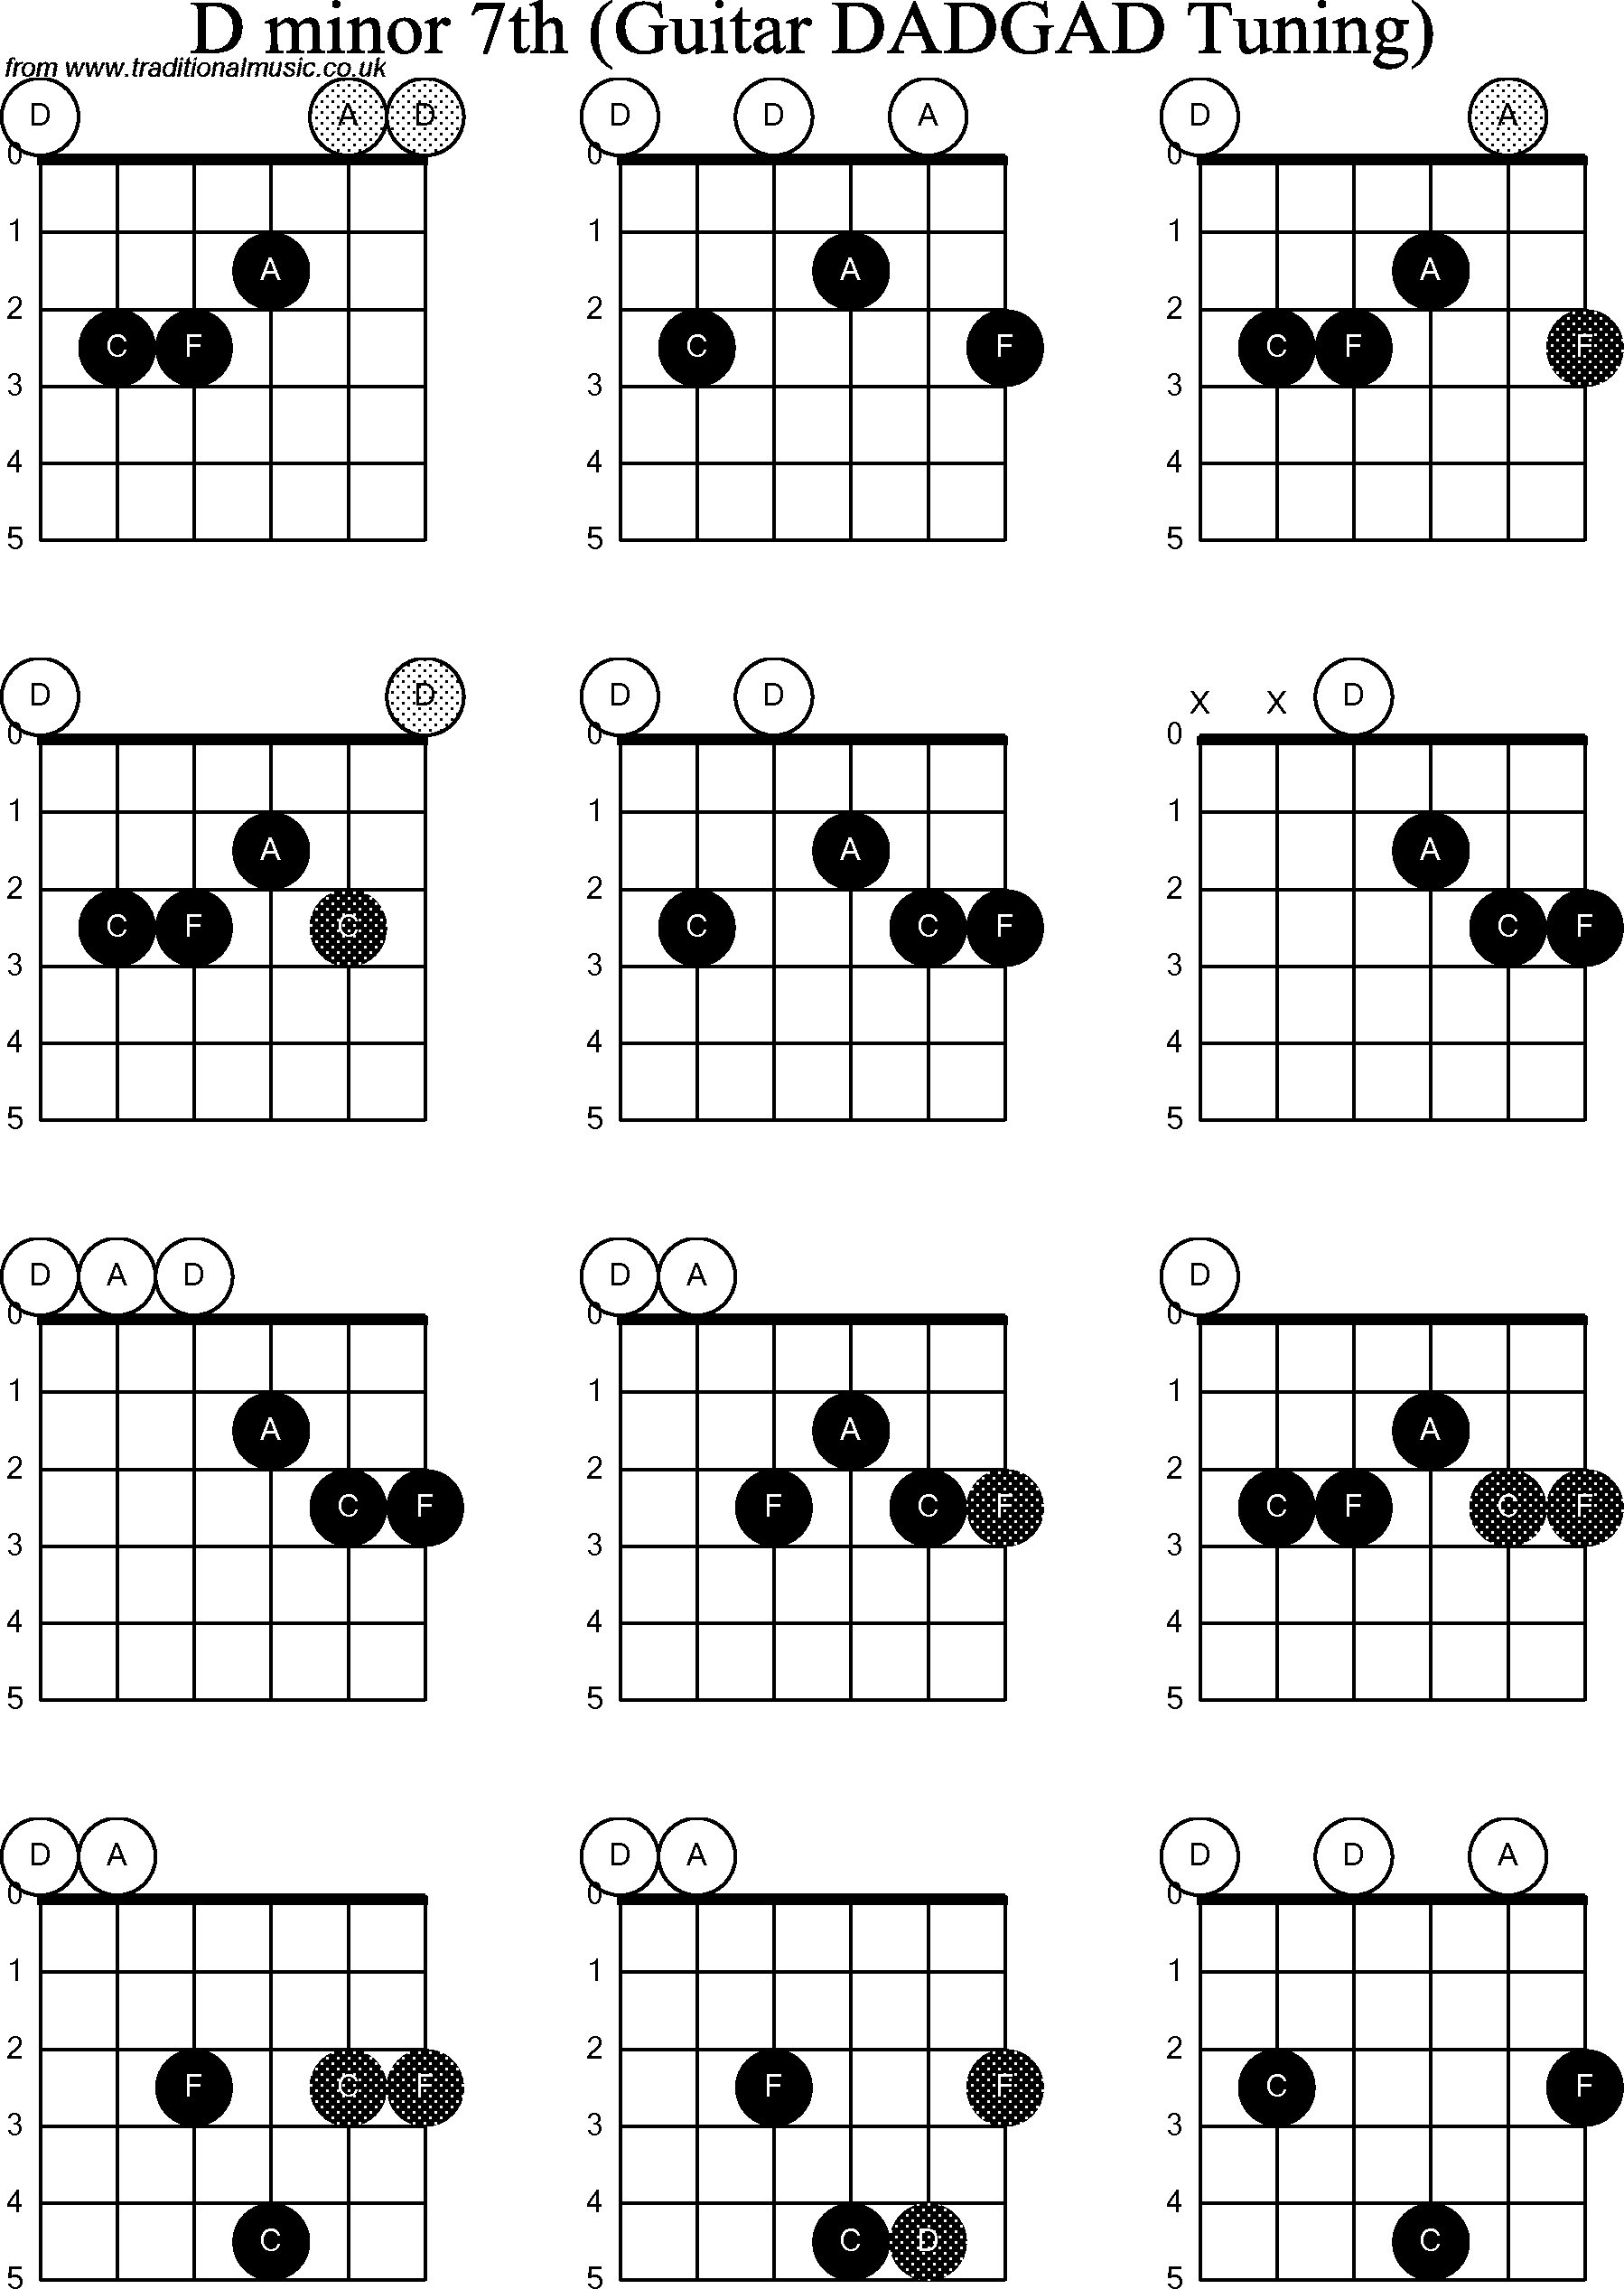 Chord Diagrams for D Modal Guitar(DADGAD), D Minor7th